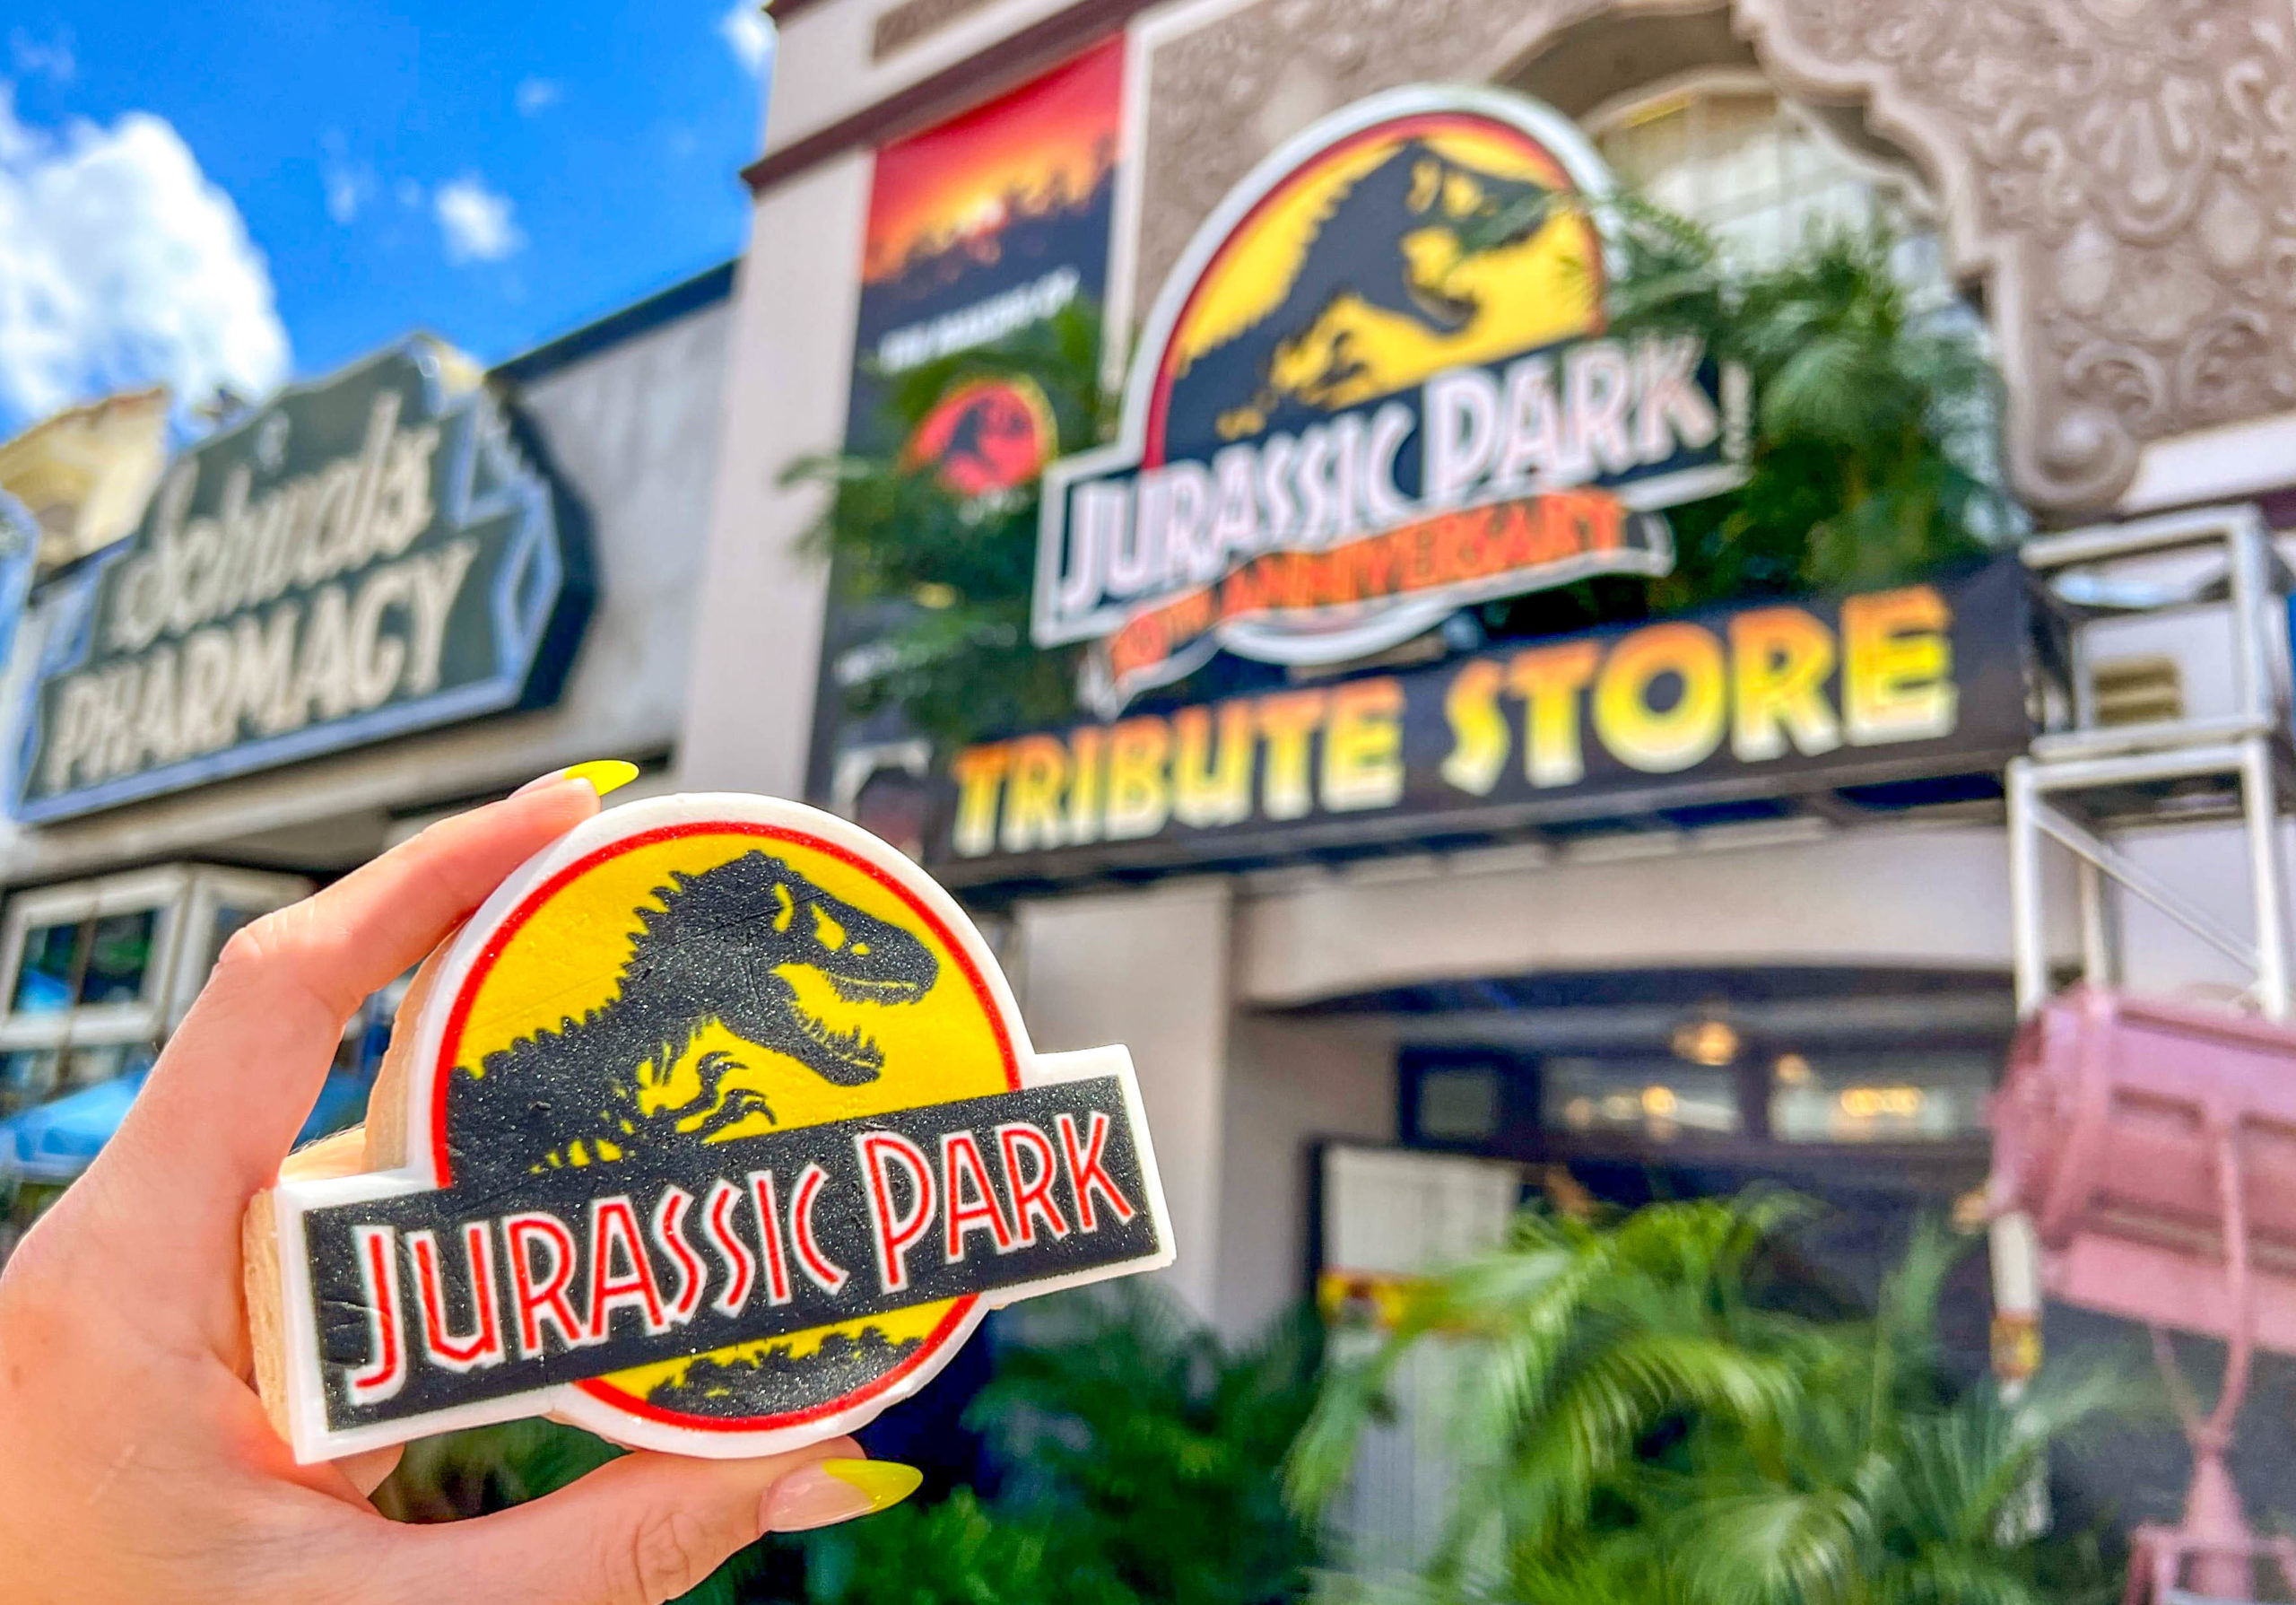 Jurassic Park Tribute Store cookie